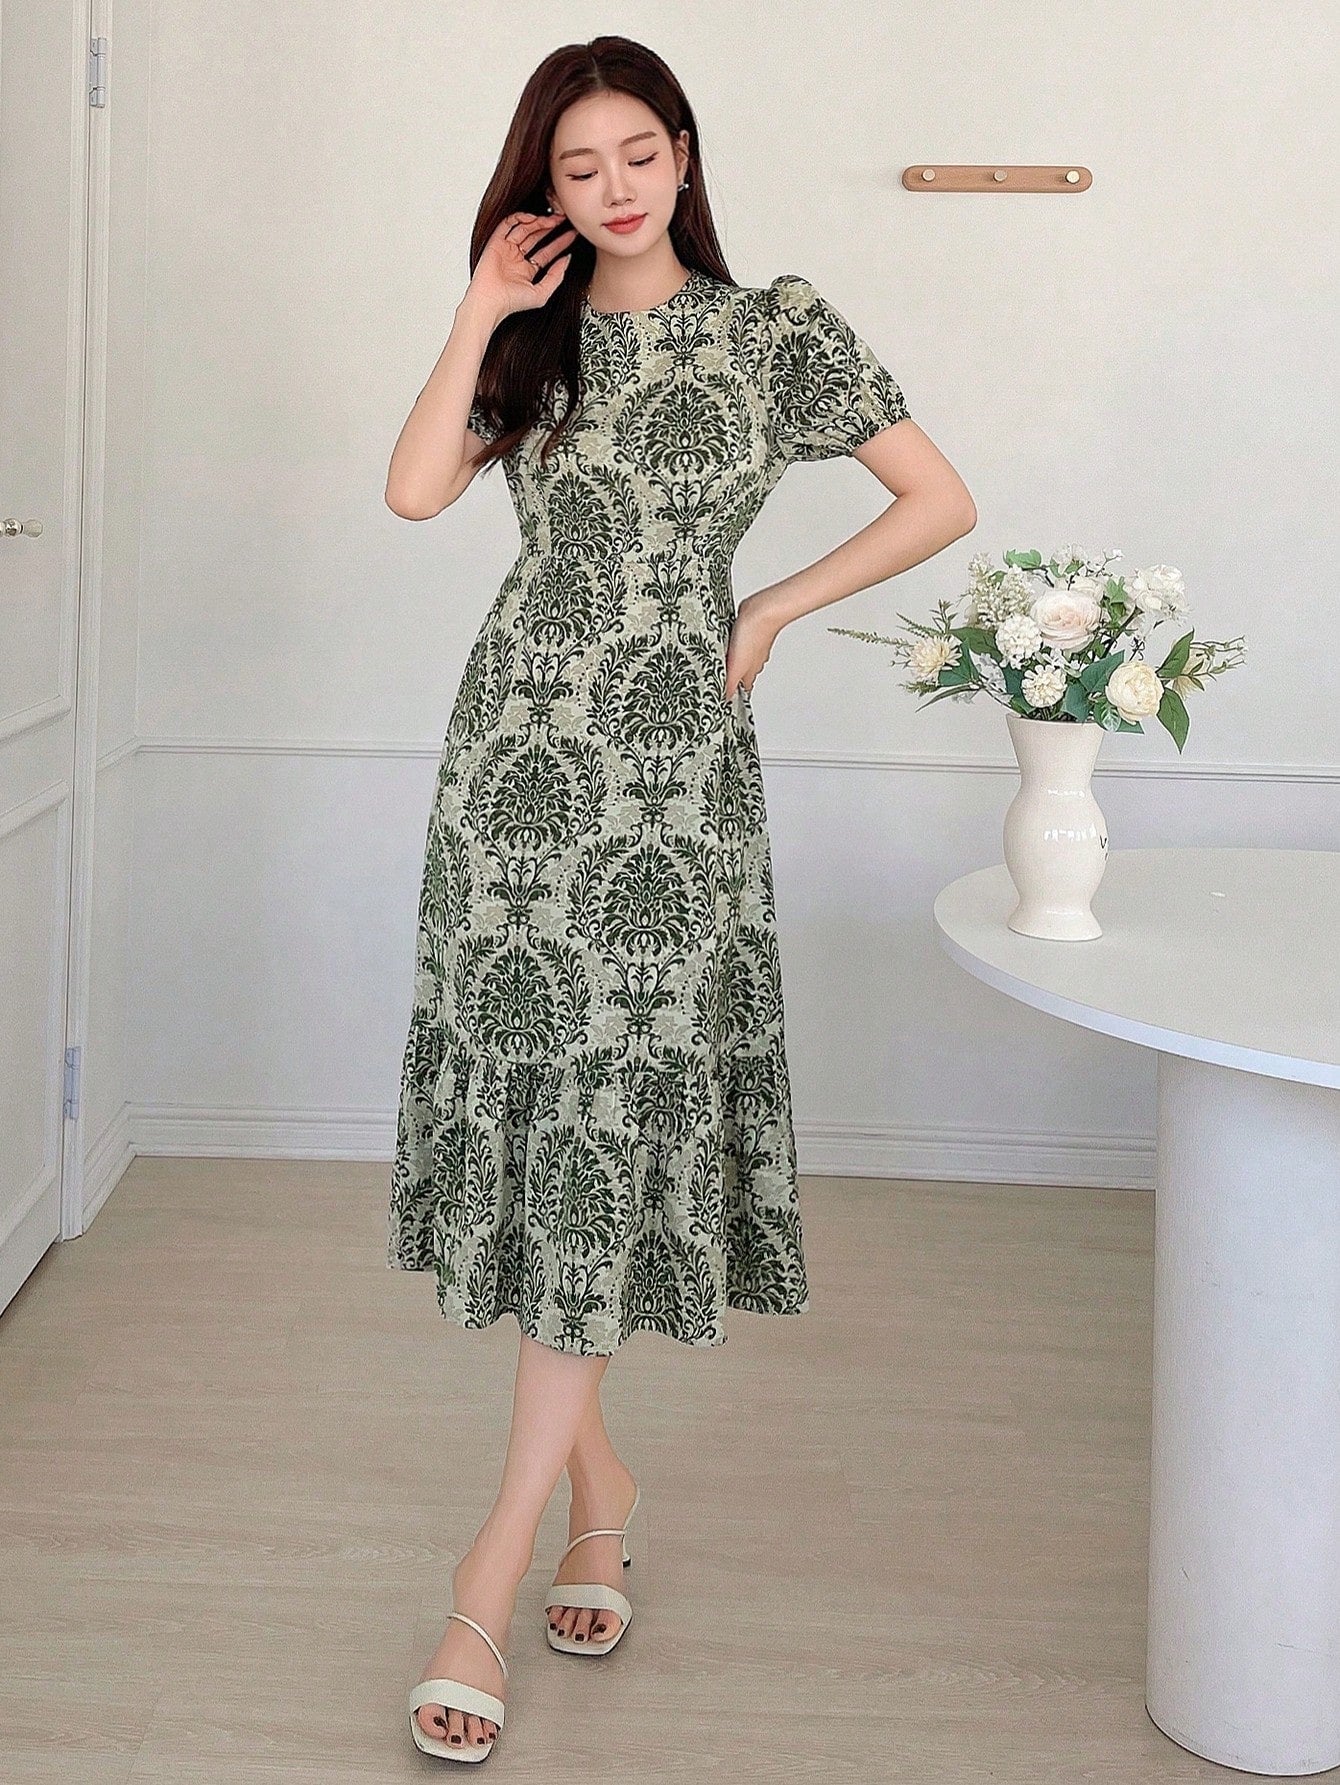 DAZY Women's Short Puff Sleeve Printed Dress